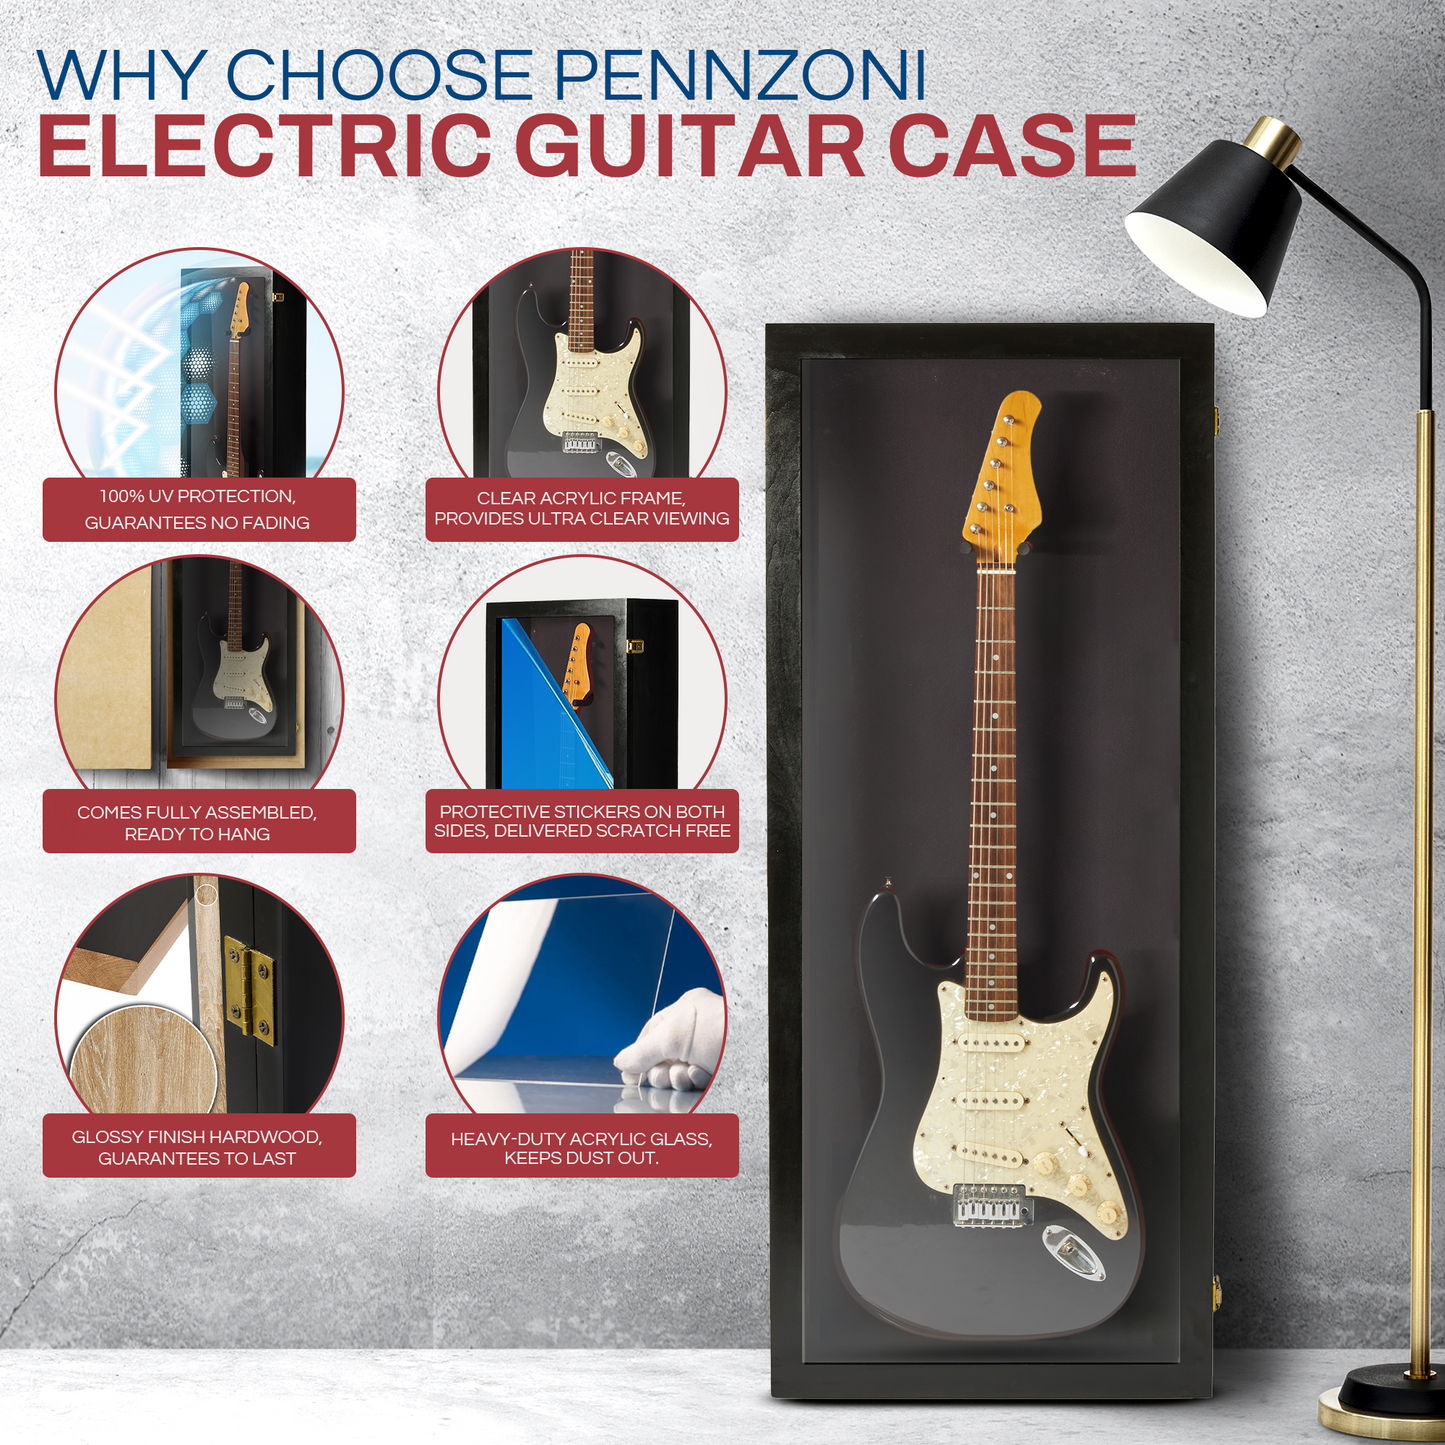 Electric Guitar Display Case